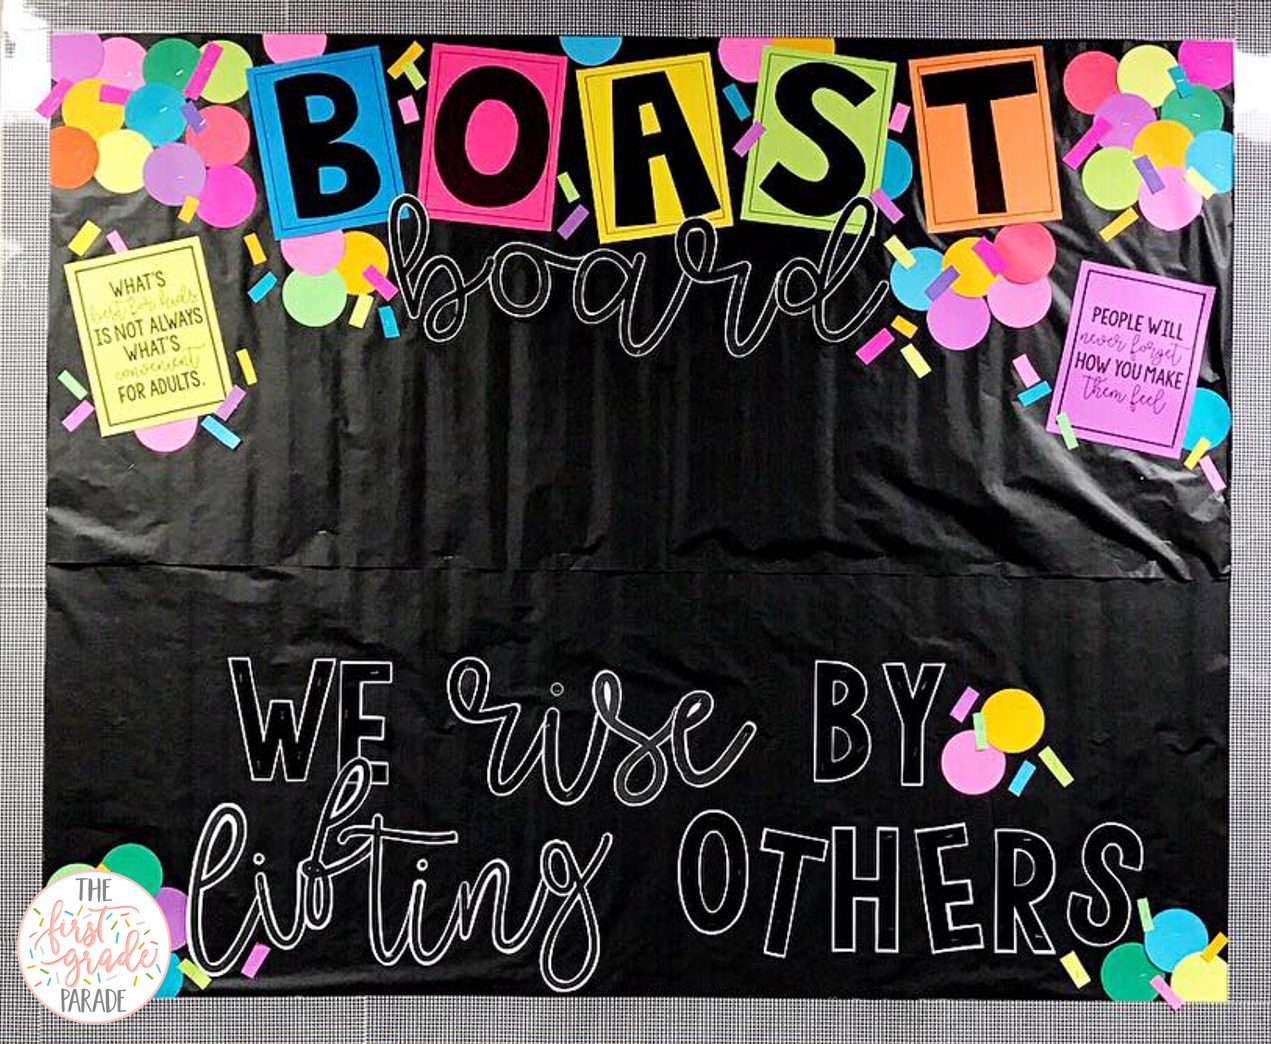 Boast Board Bulletin Board Idea The First Grade Parade